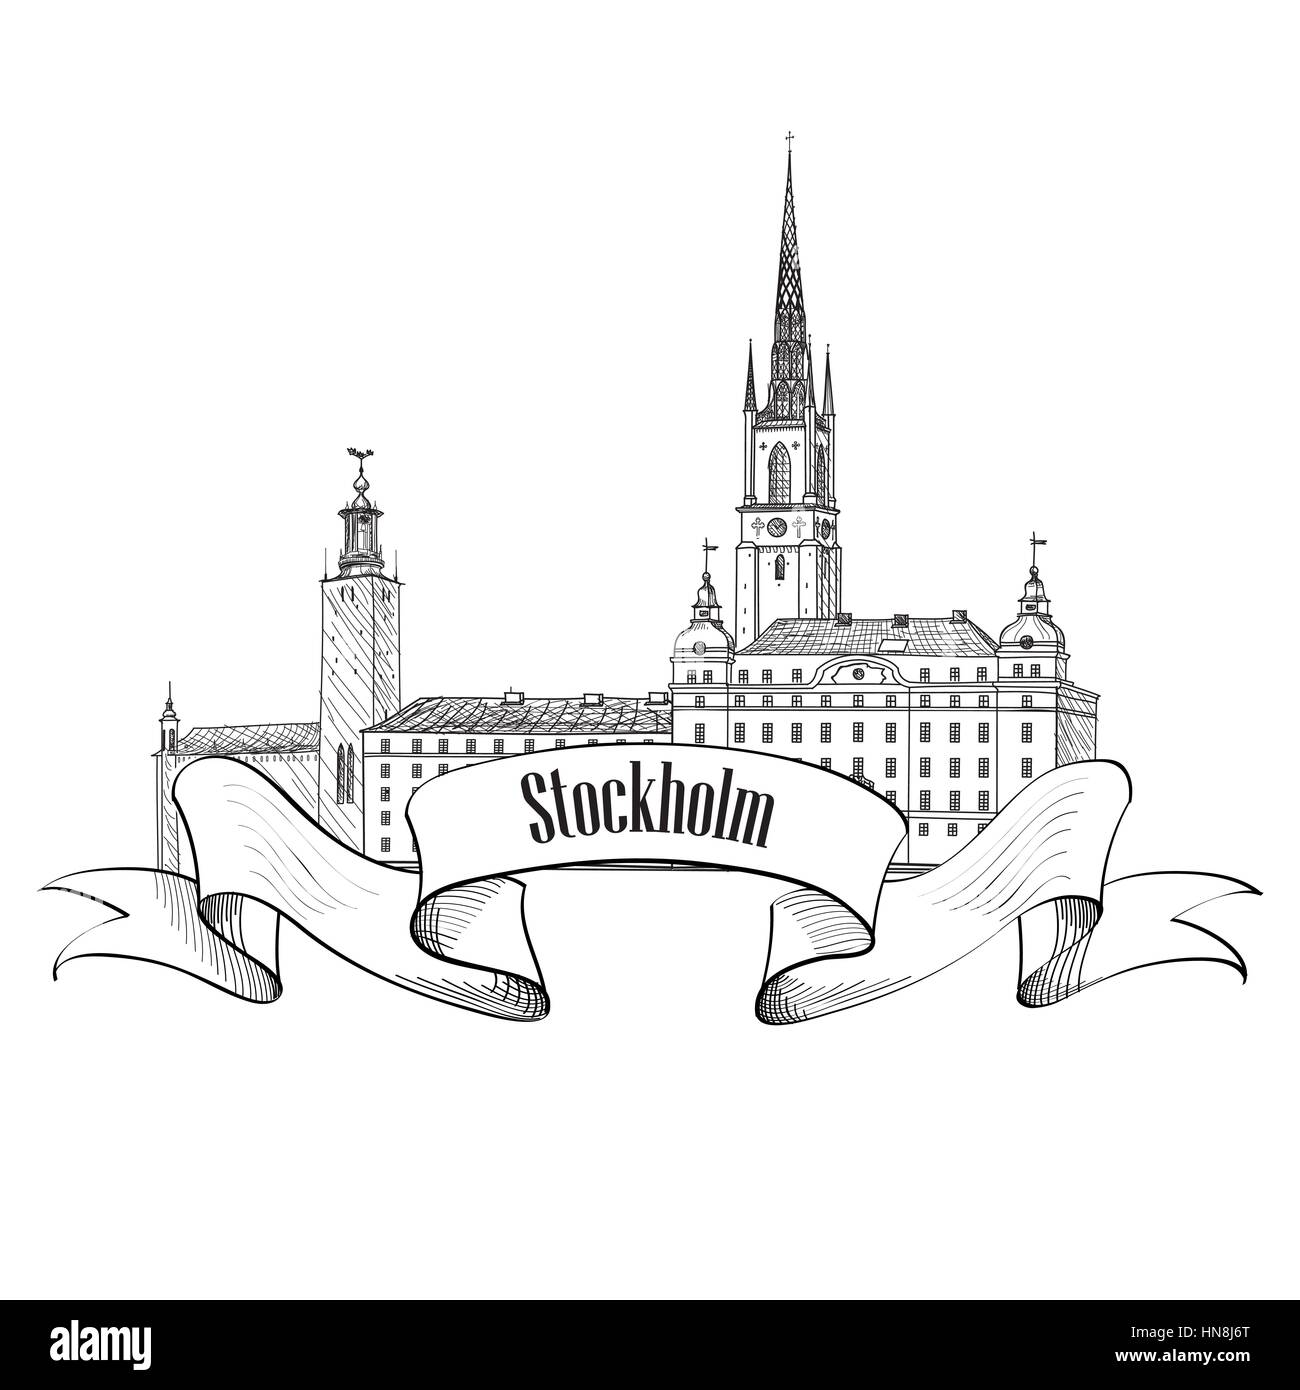 Stockholm label isolated. Travel Sweden symbol. Stockholm Old Town architecture detailed skyline. Vector landmark building illustration. Stock Vector